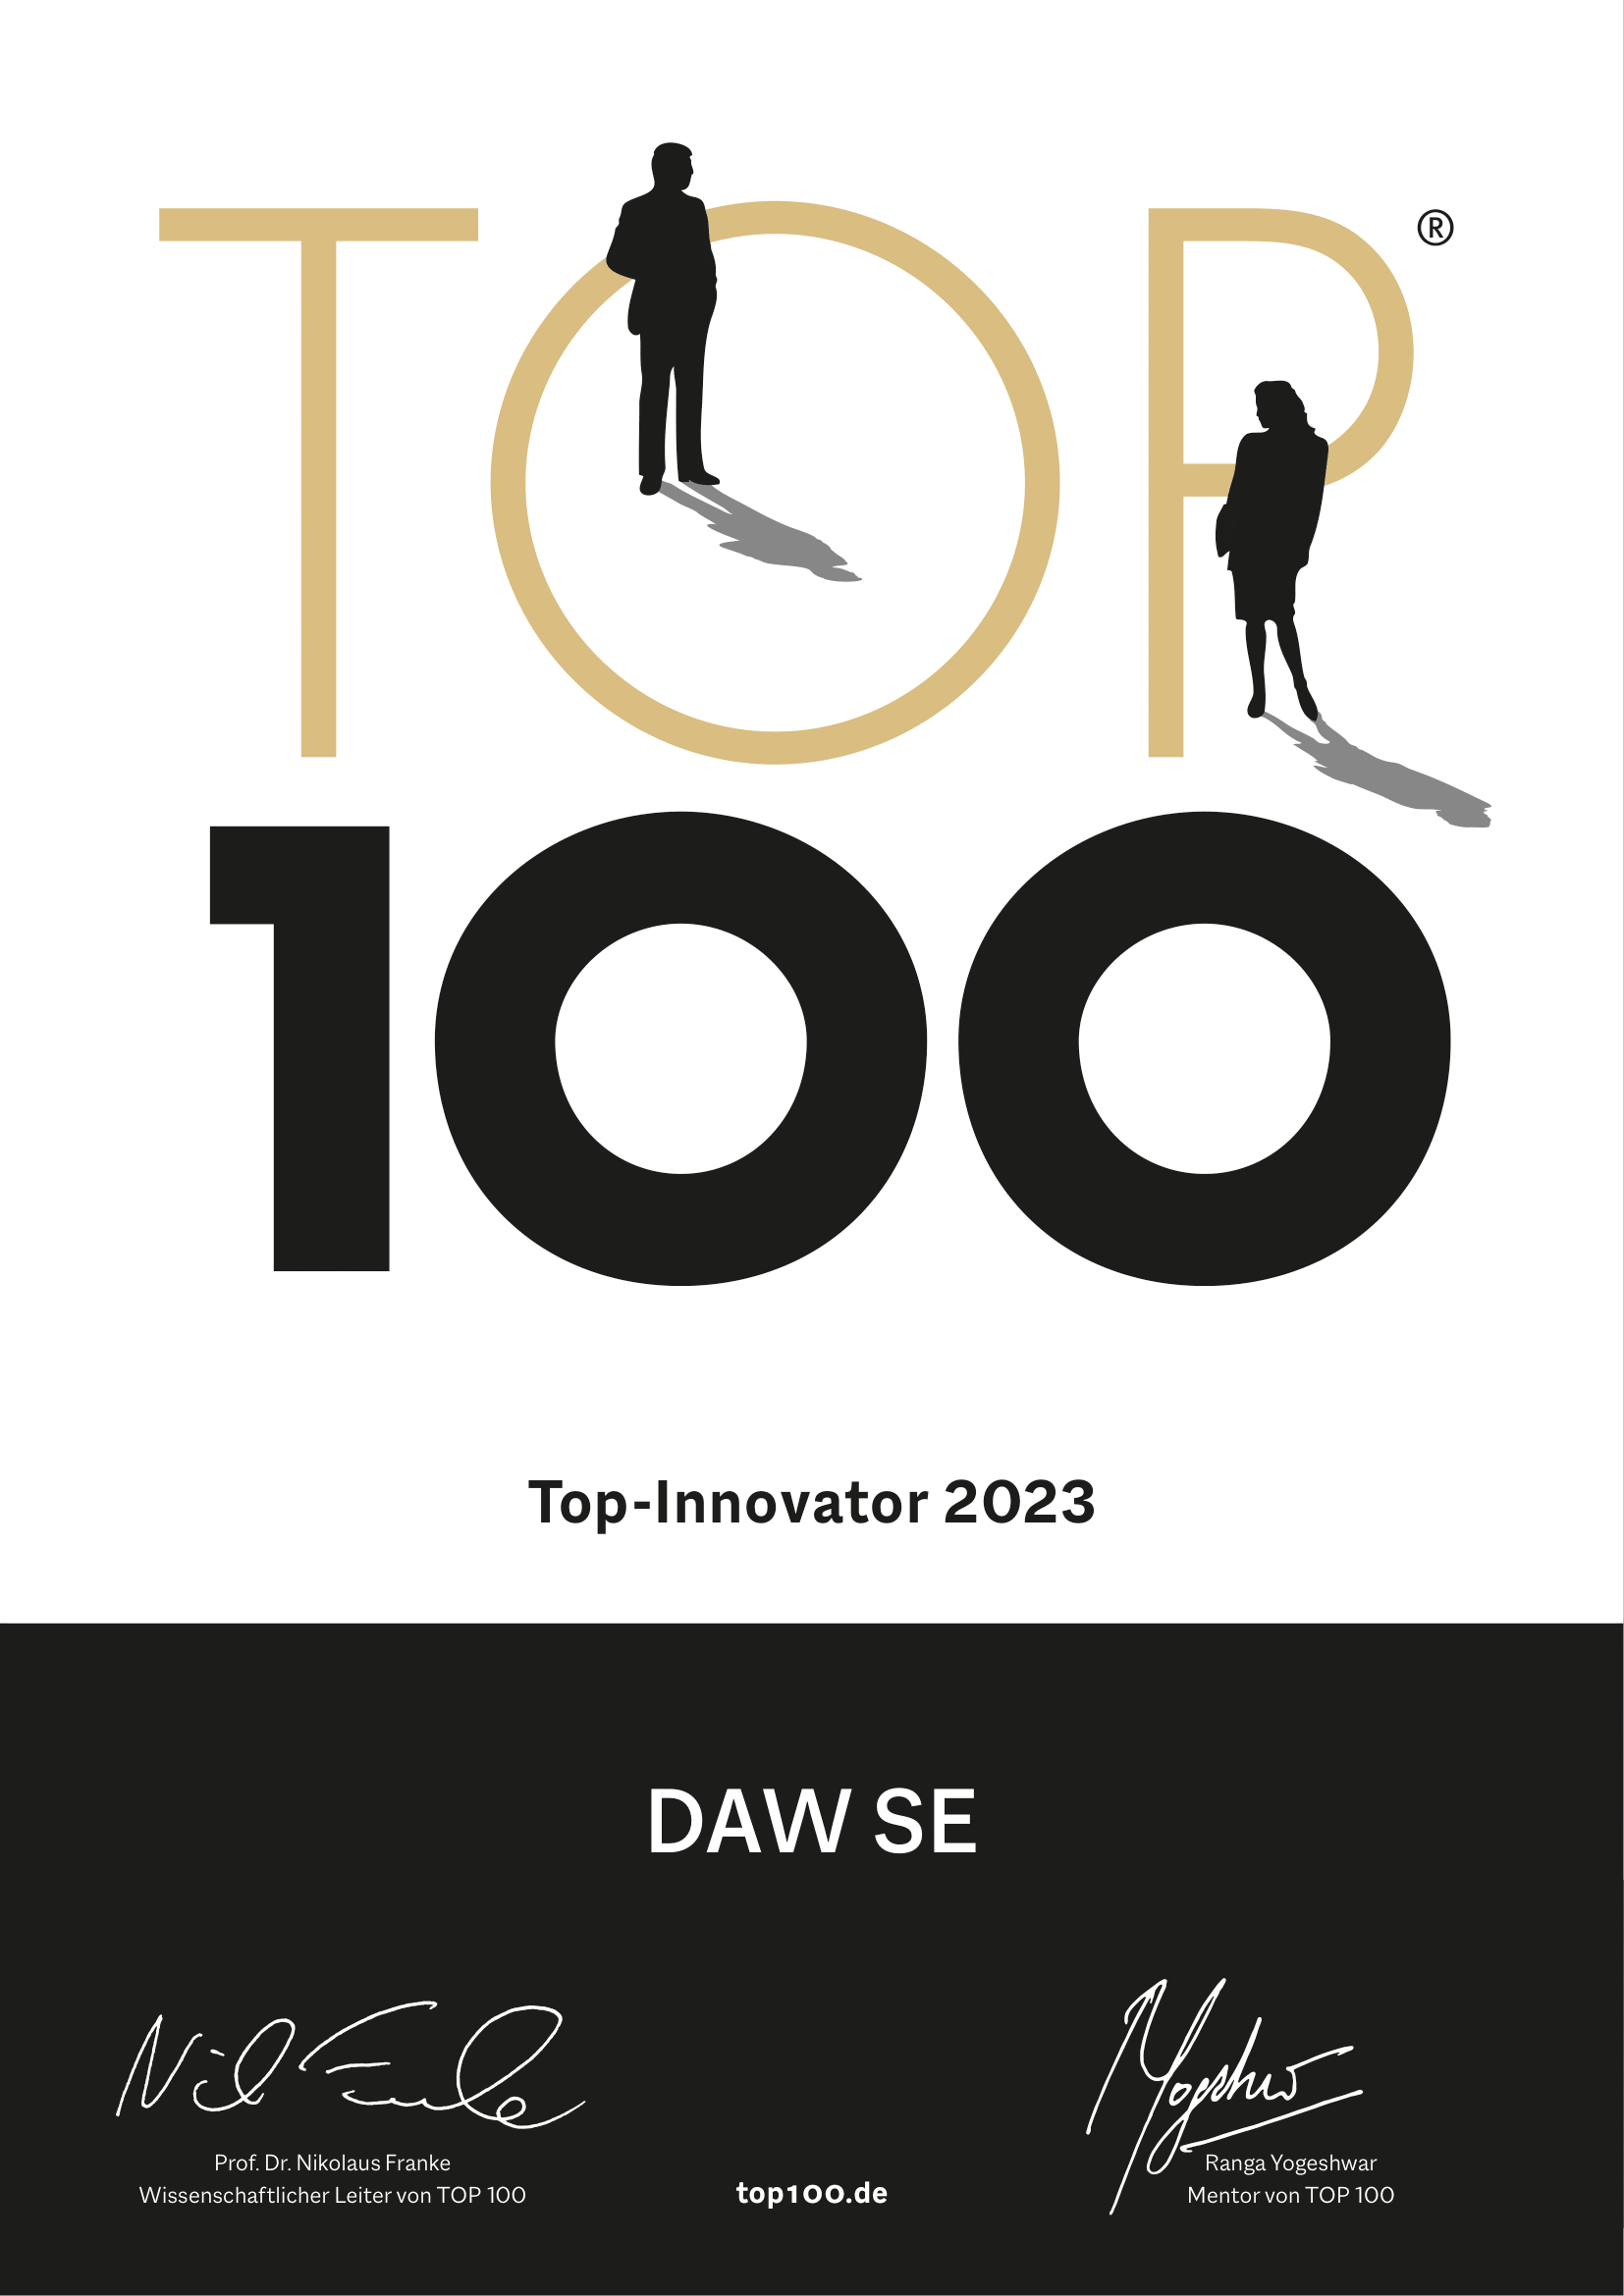 Top 100 - Top-Innovator 2023